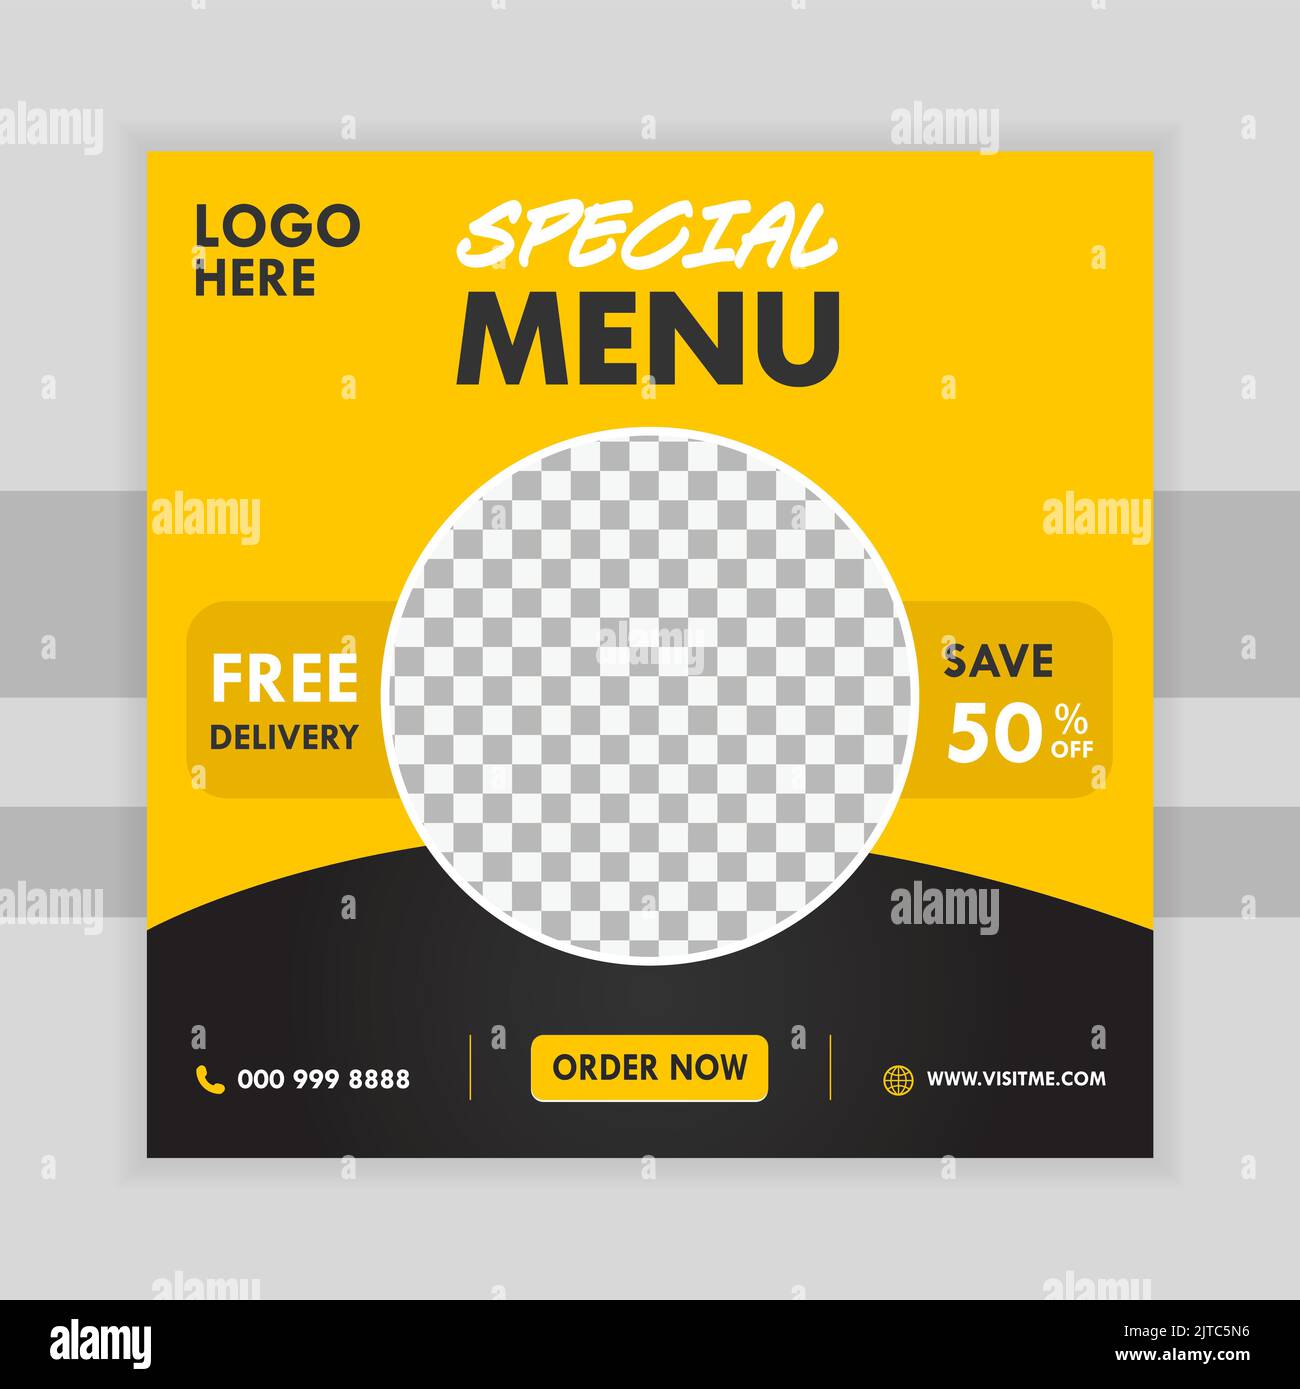 Promotional Food Banner Social Media Post Isolated Design Restaurant Marketing Premium Template Stock Vector